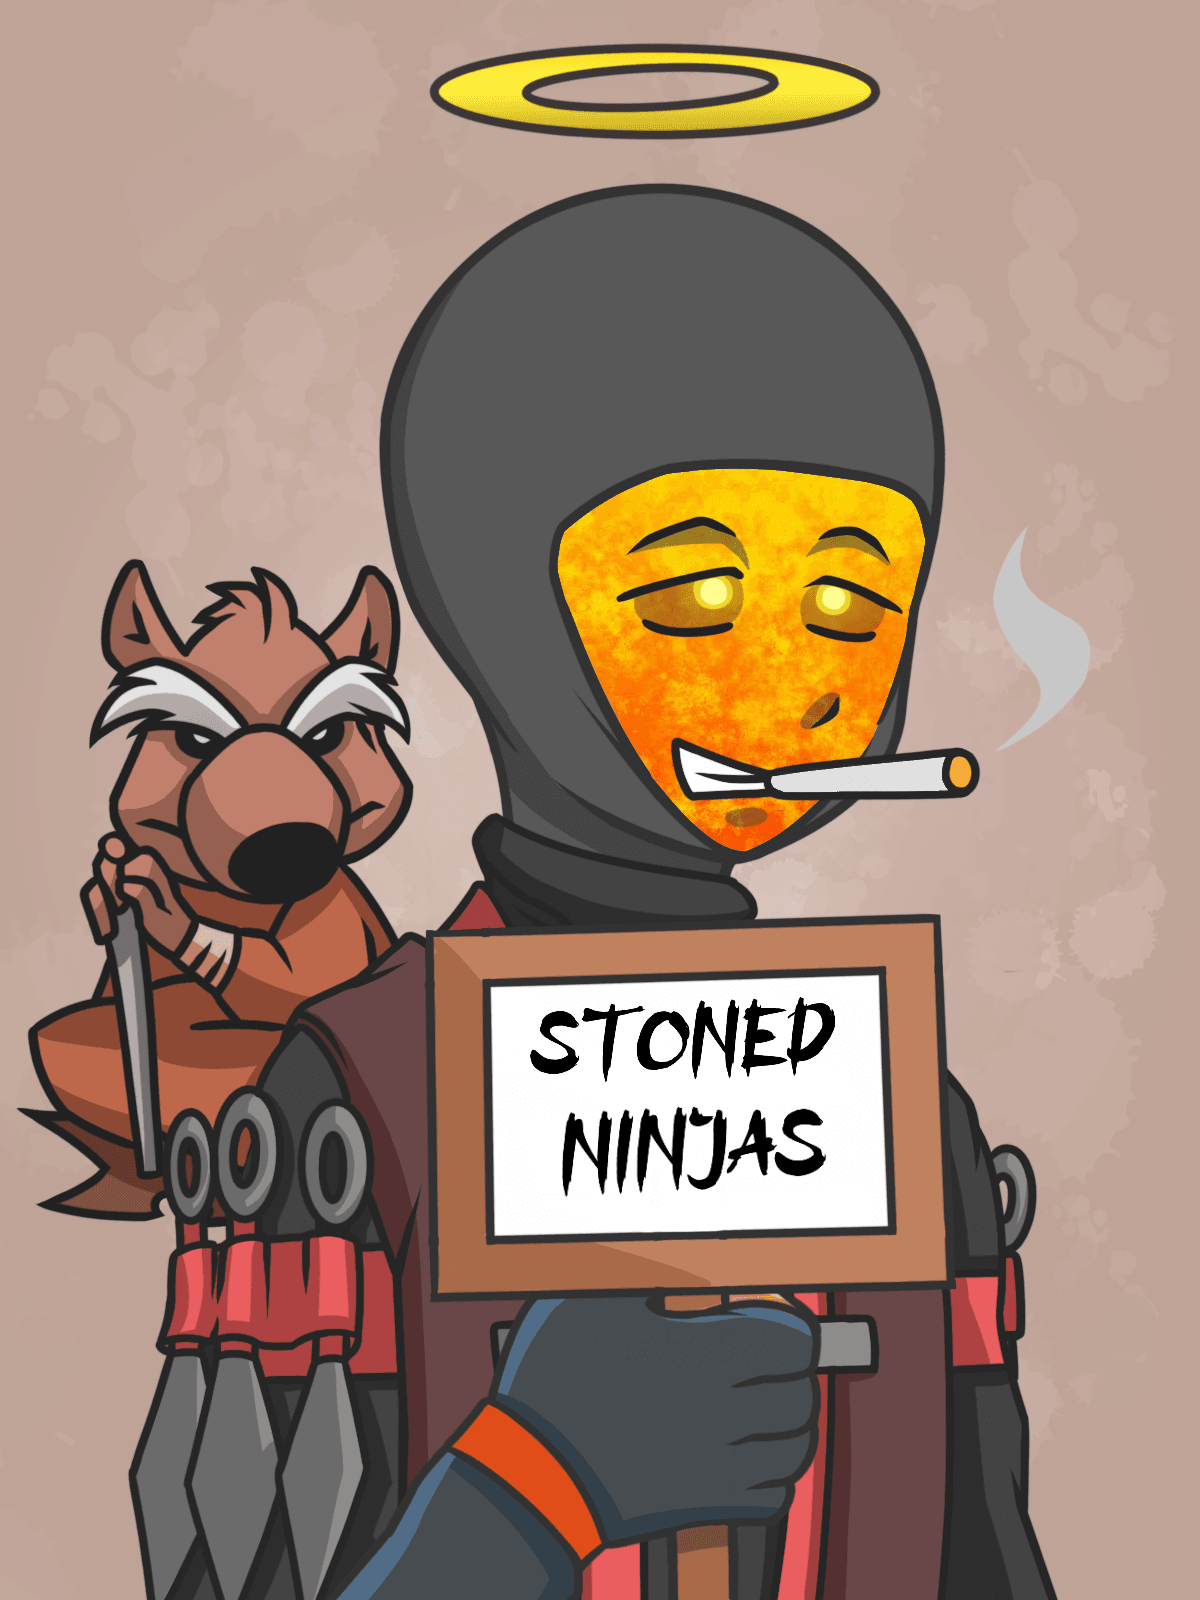 Stoned Ninjas #532